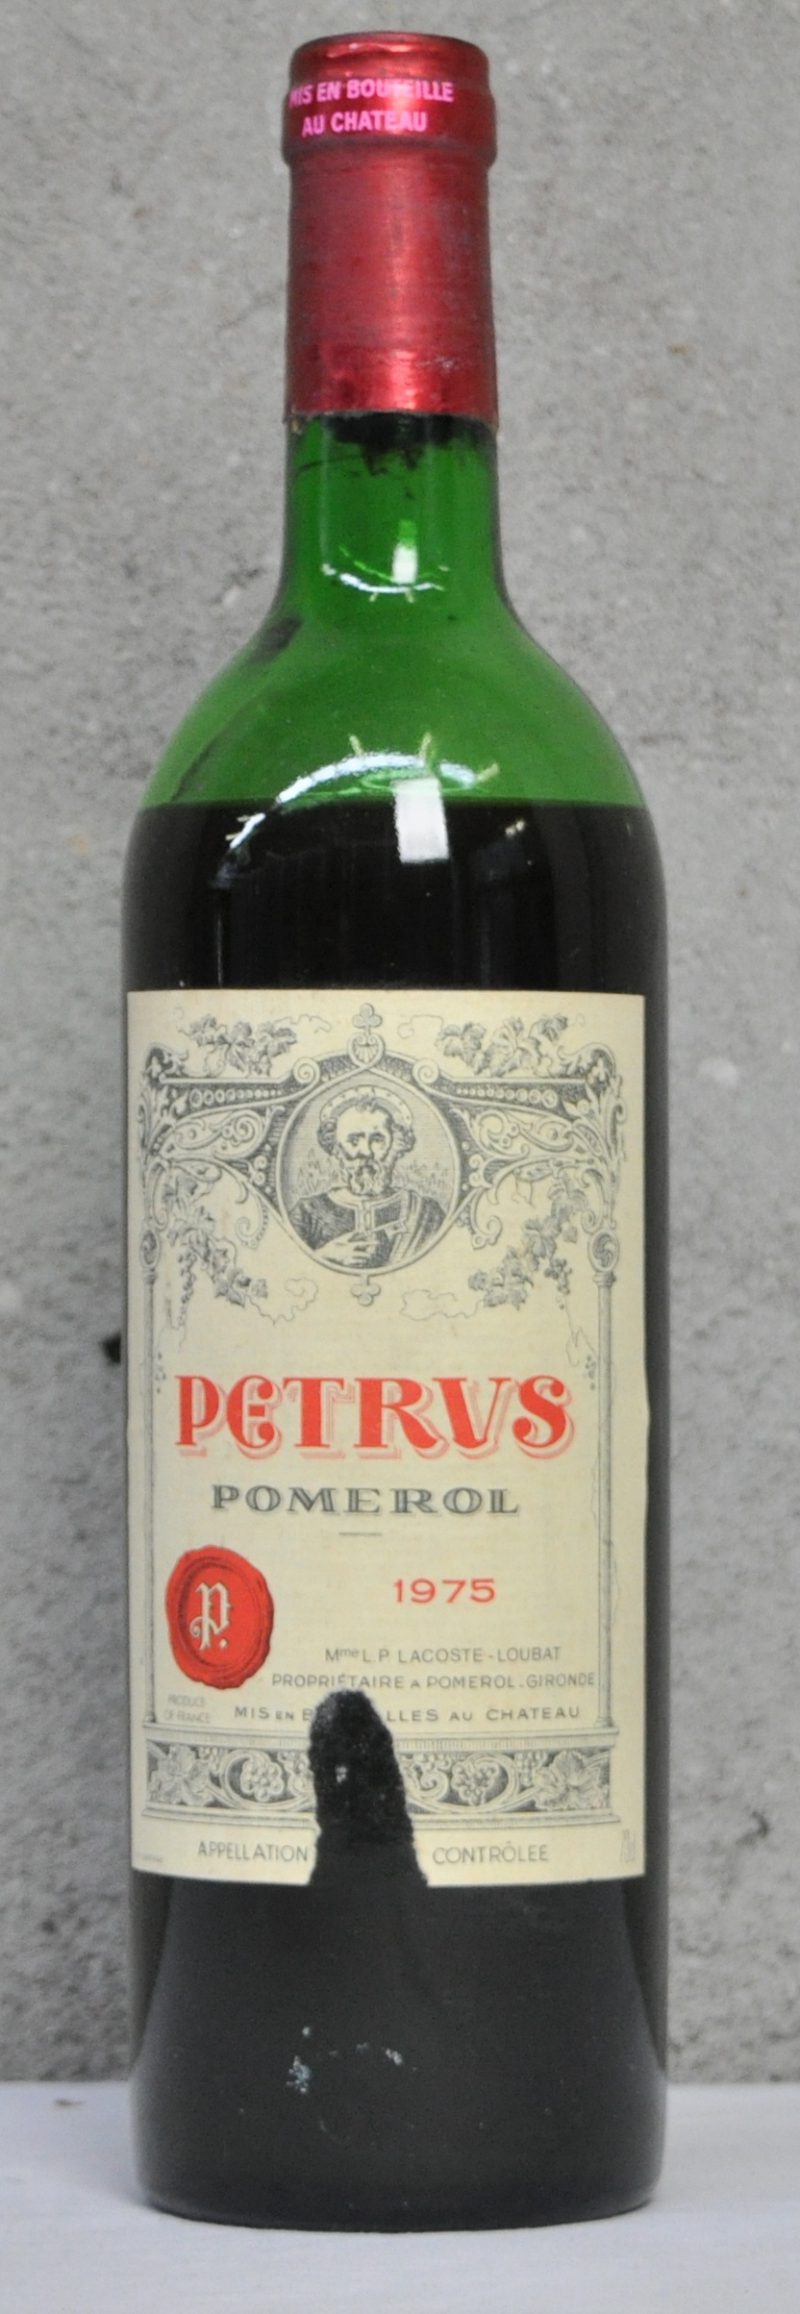 Pétrus A.C. Pomerol   M.C.  1975  aantal: 1 bt ls, scheur in etiket